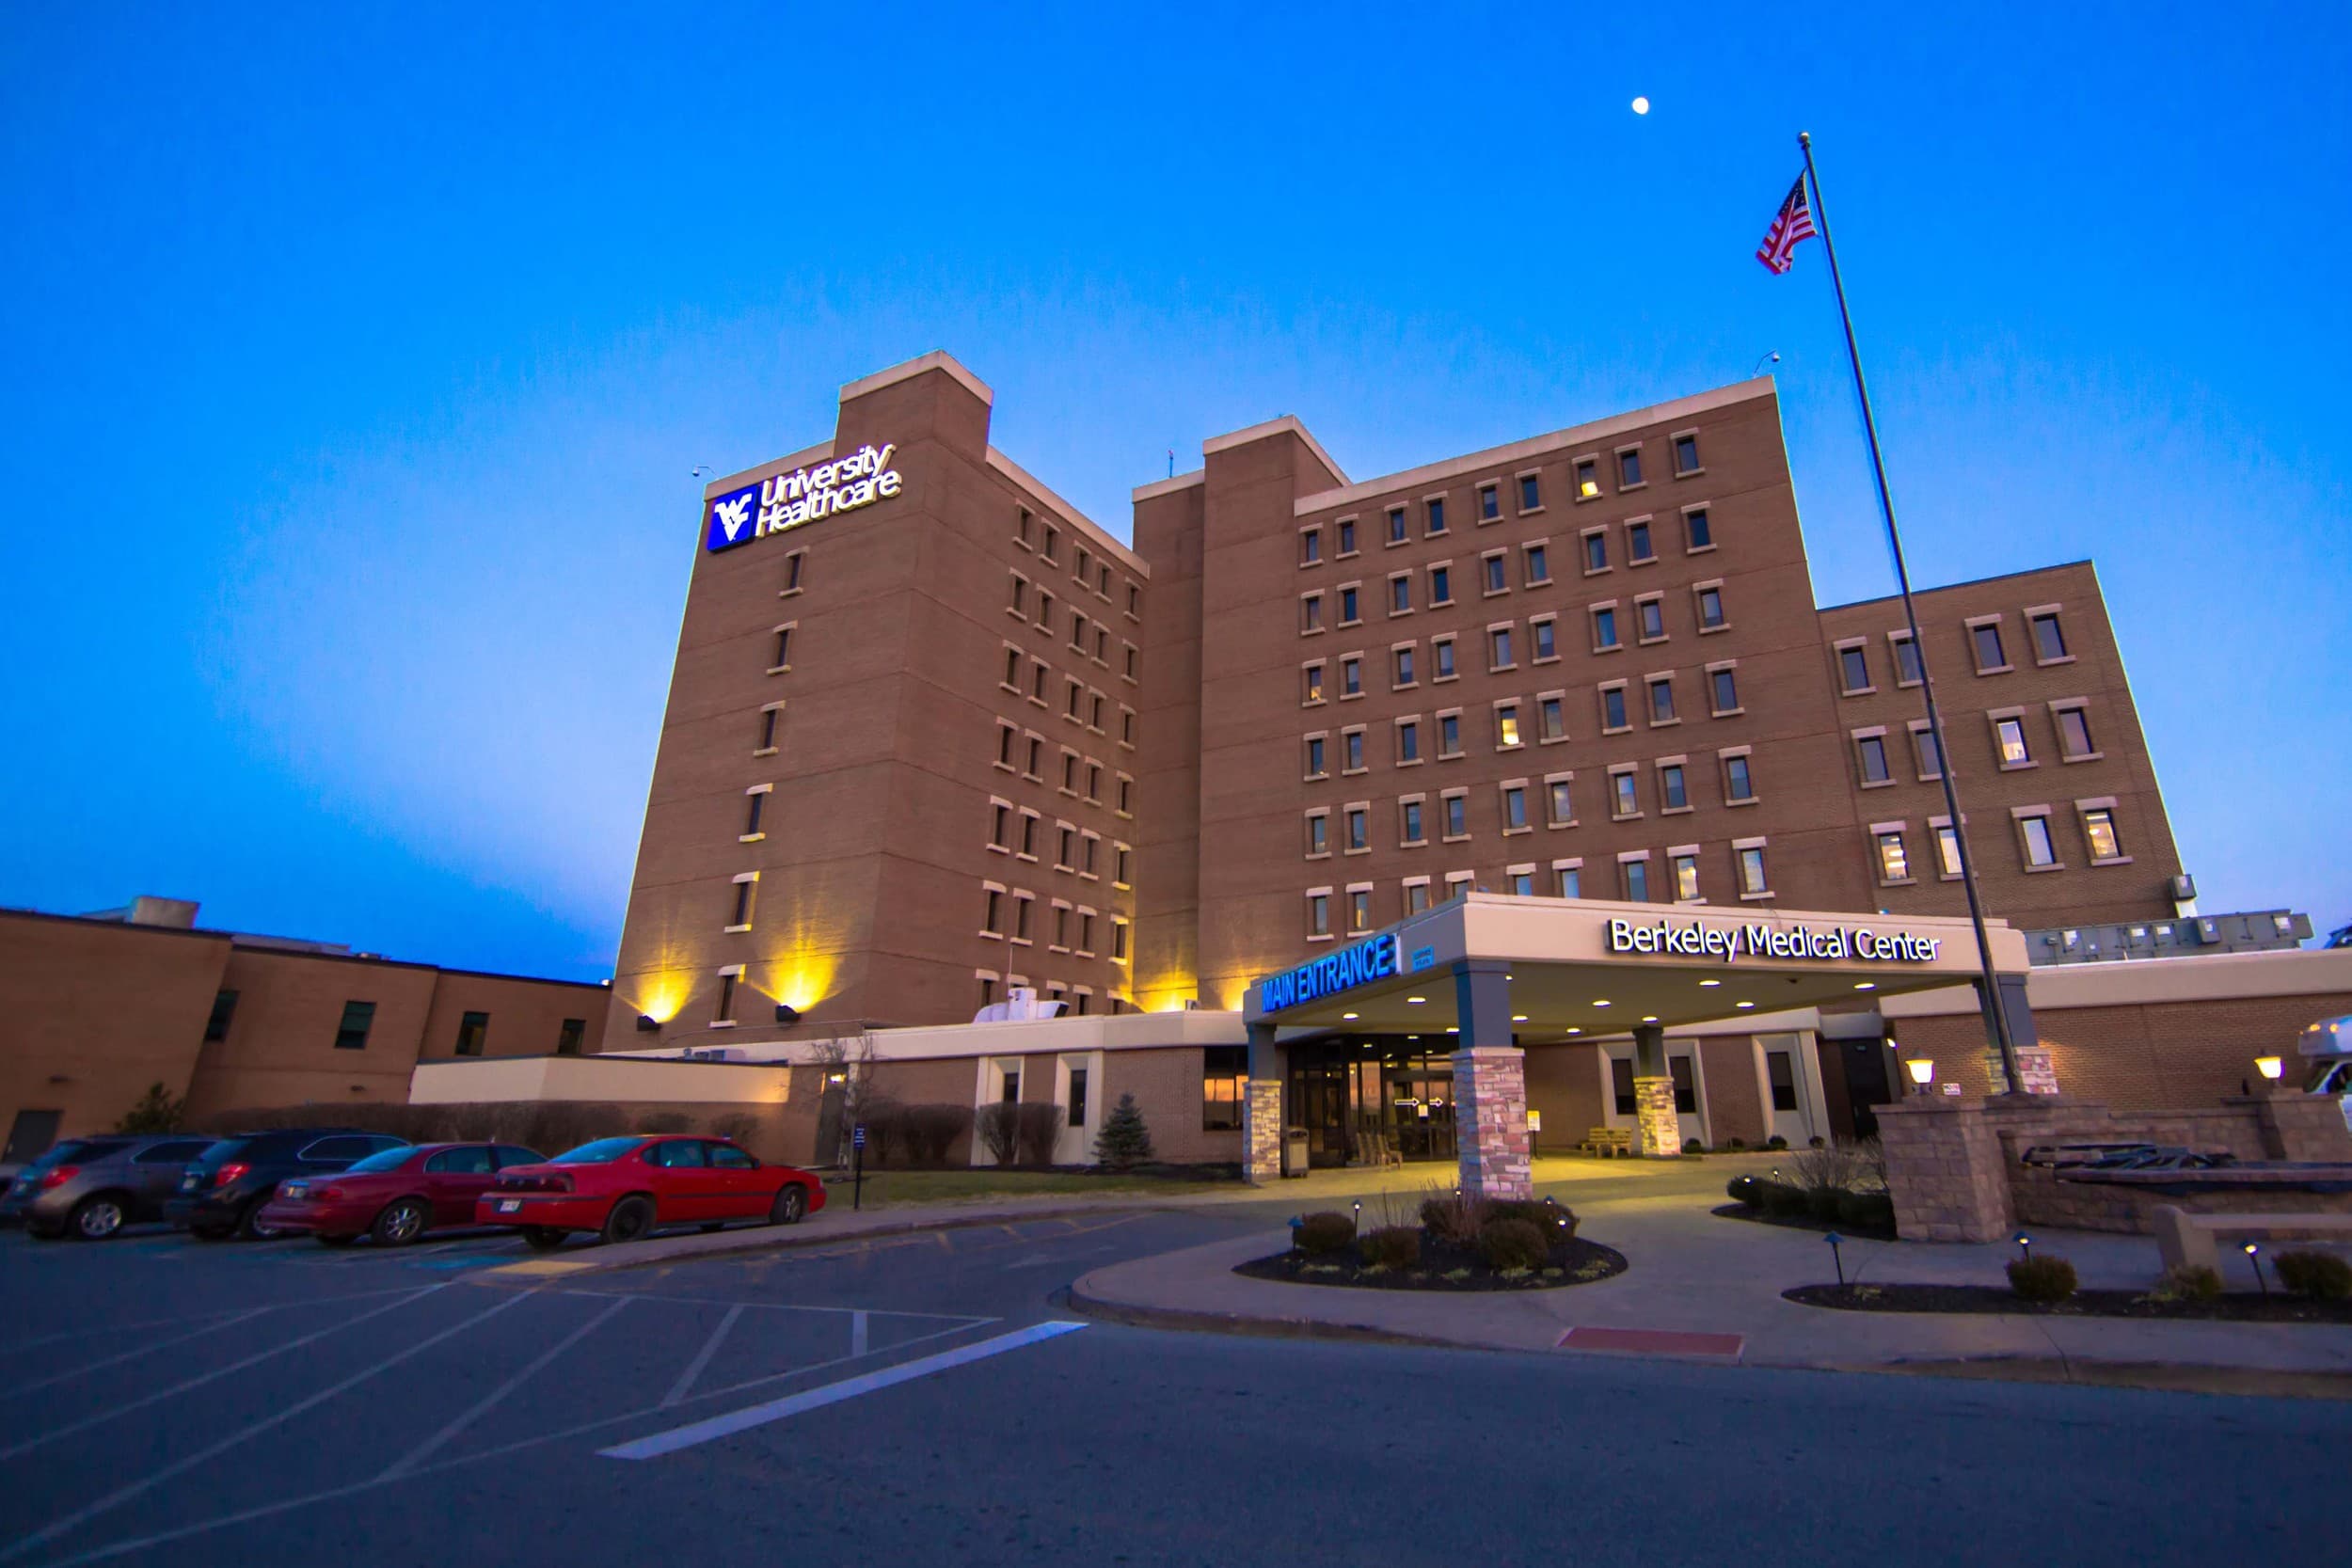 West Virginia University Berkely Medical Center – Interventional Radiology Expansion